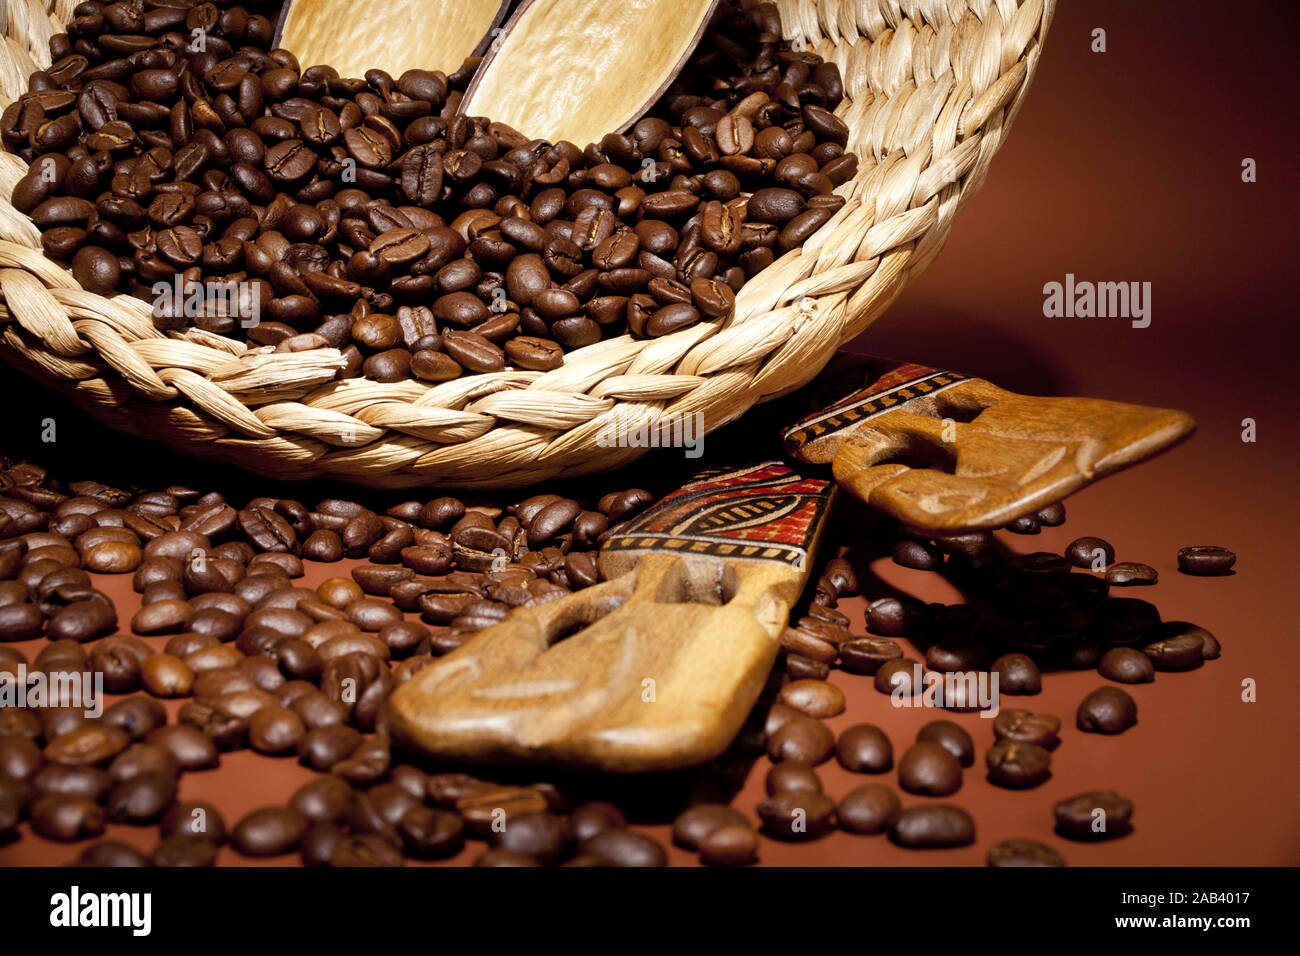 Schale mit frisch geroesteten Kaffeebohnen |tazza di caffè tostato fagioli| Foto Stock